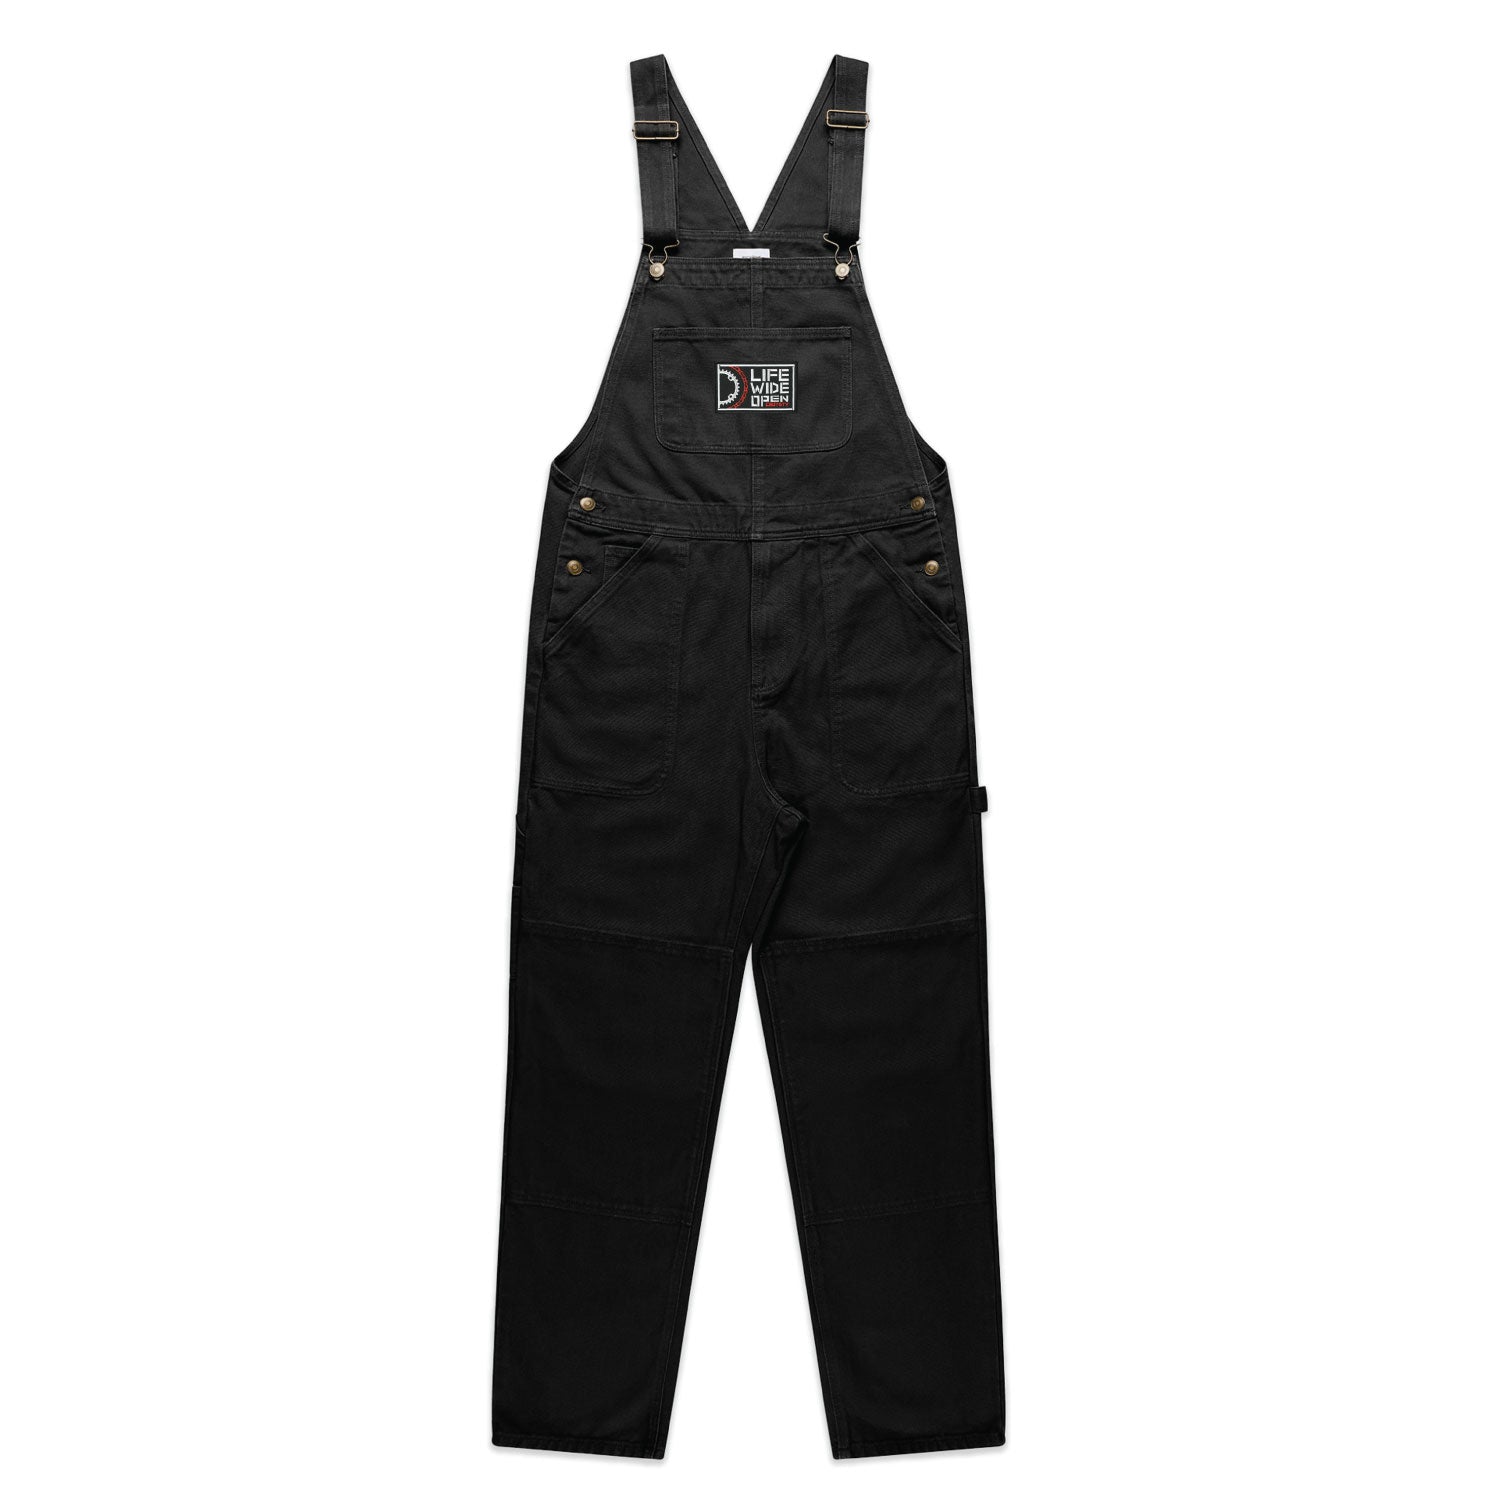 Black Workwear Overall LWO Bibs